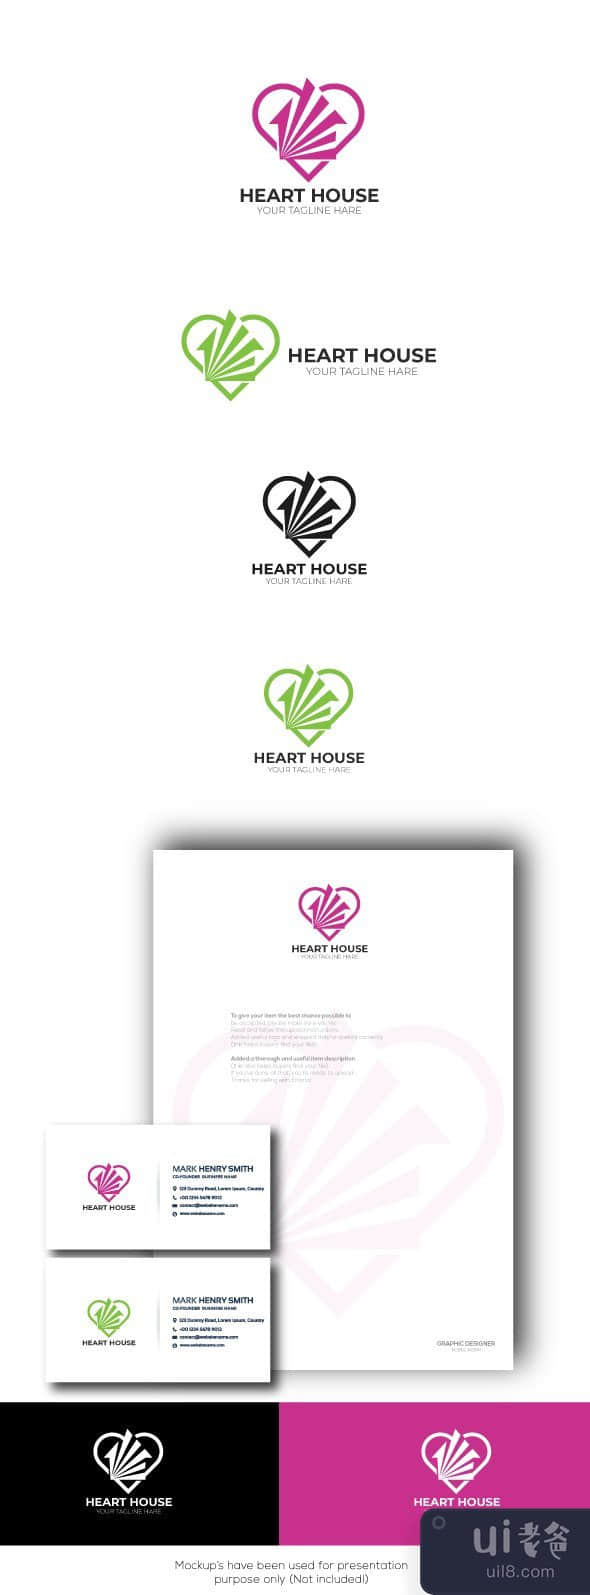 心之家徽标(Heart House logo)插图5